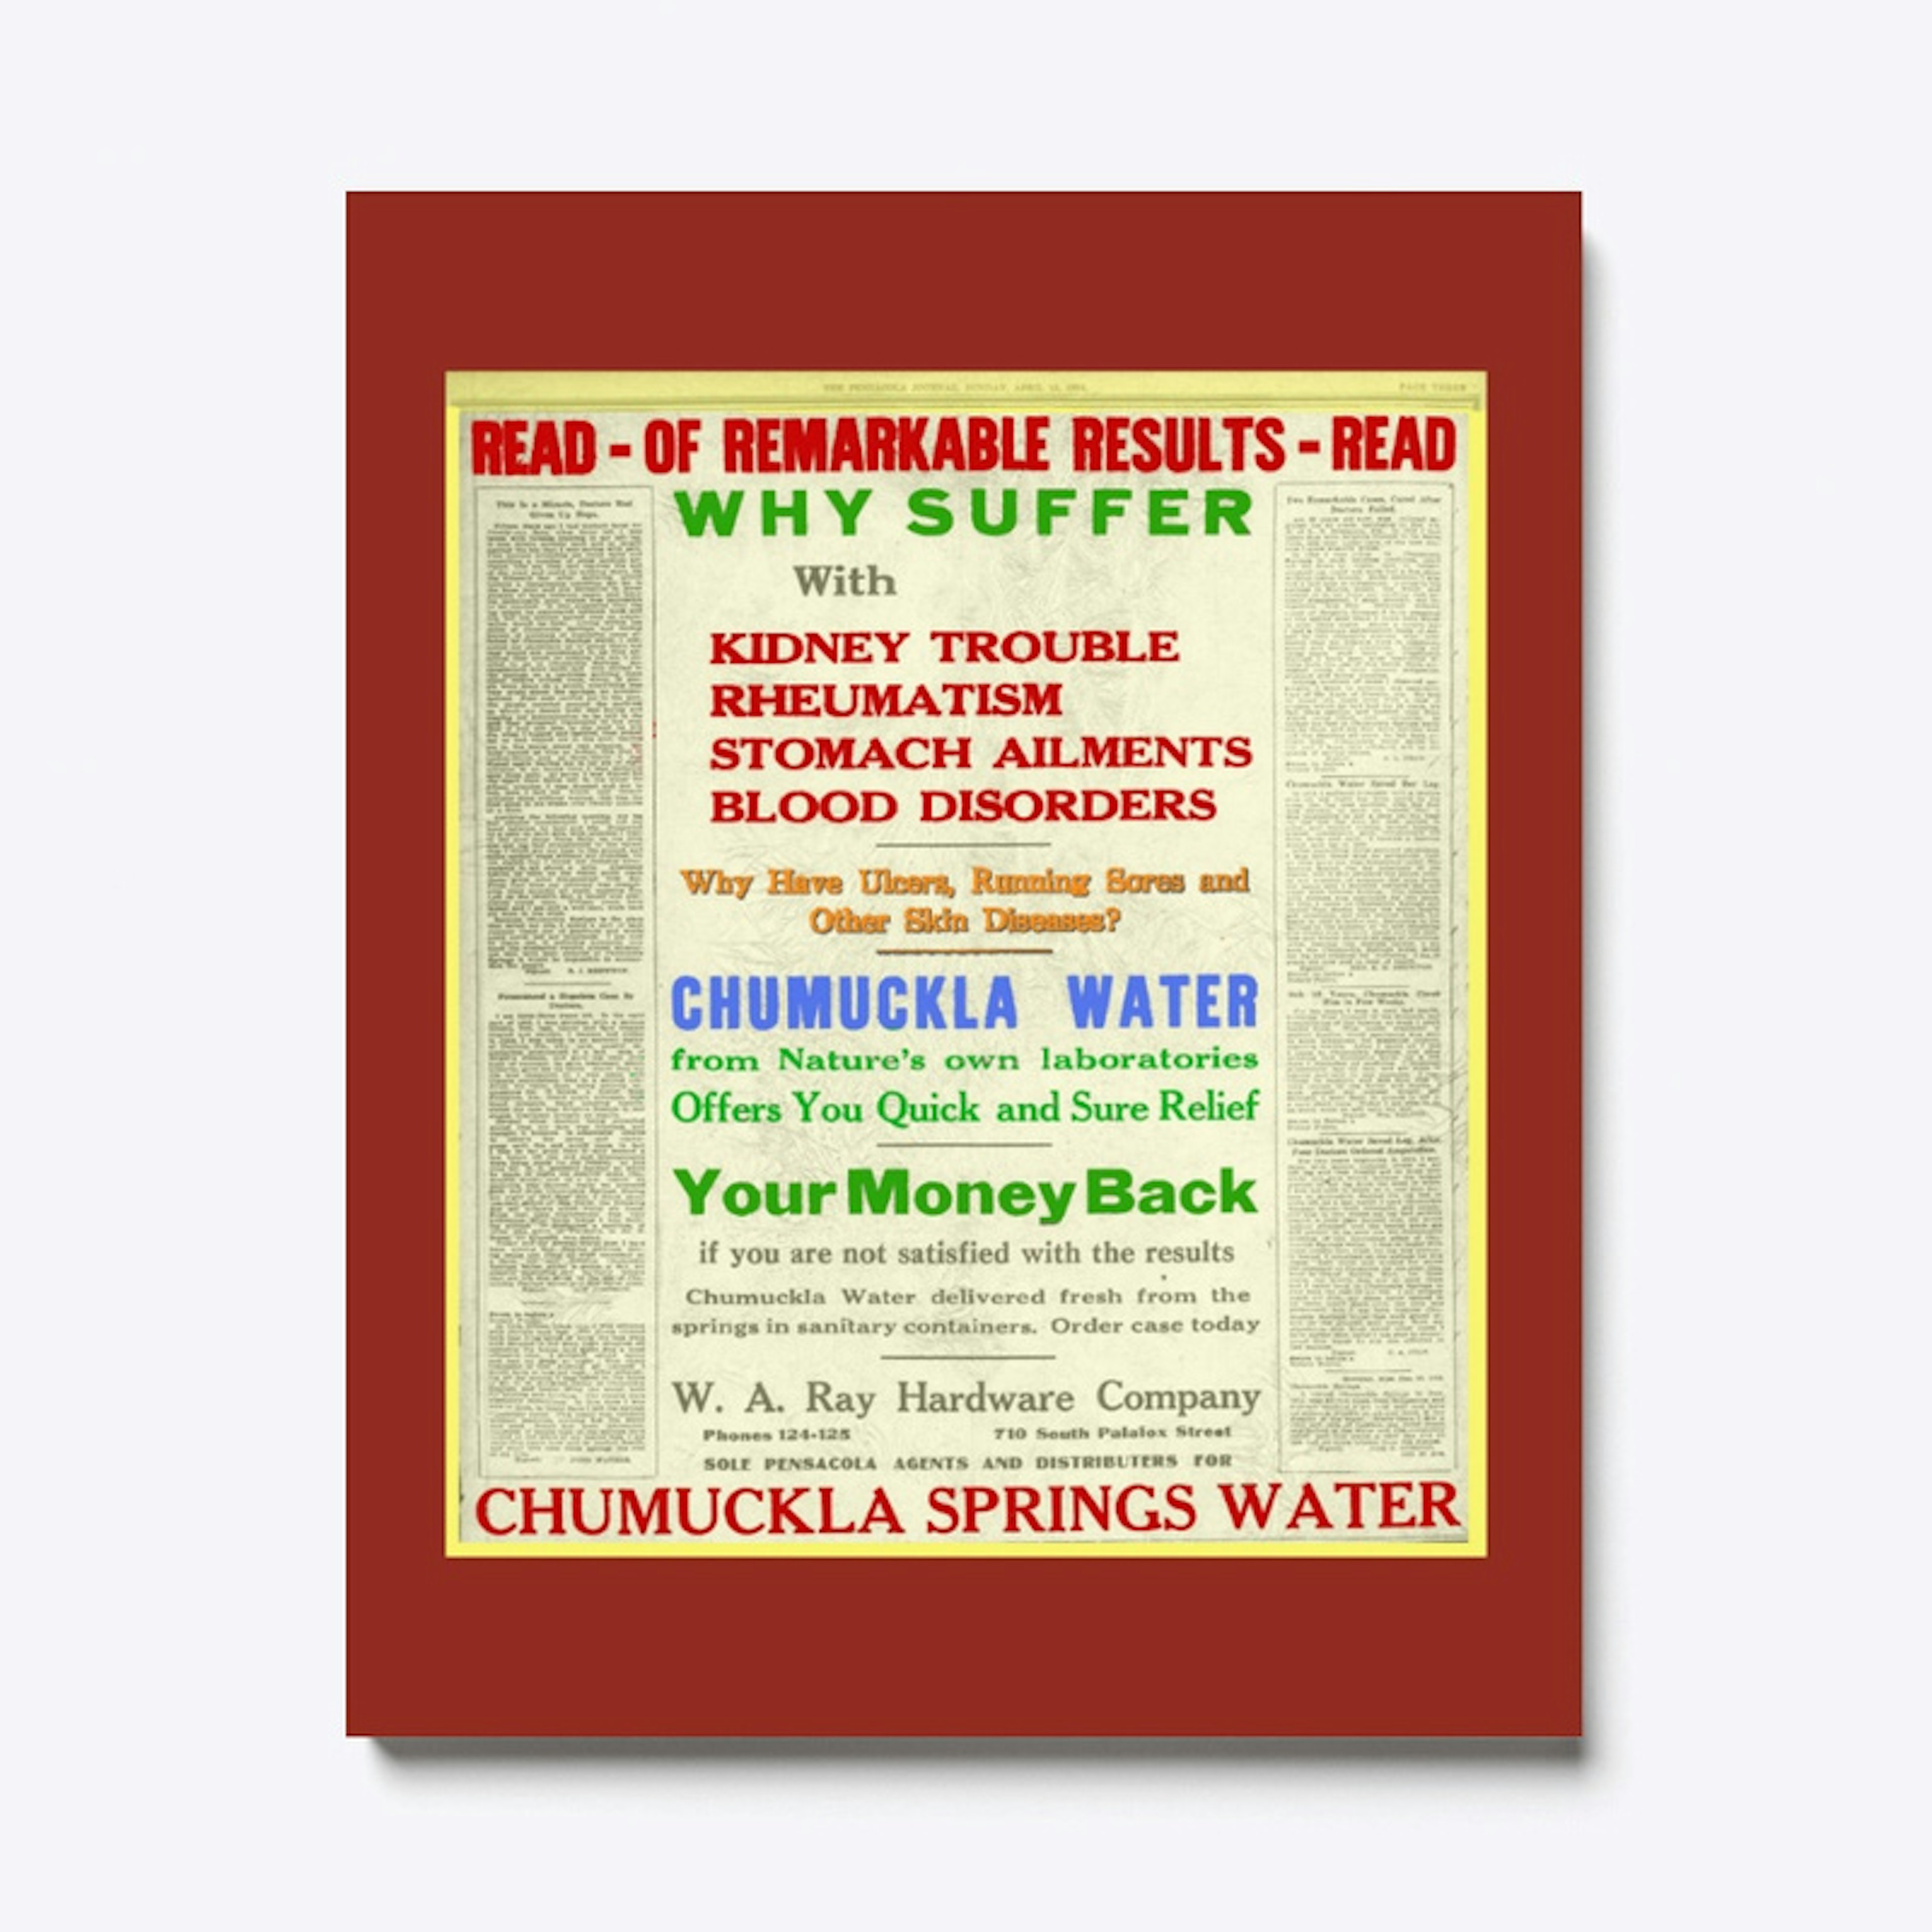 Chumuckla Water